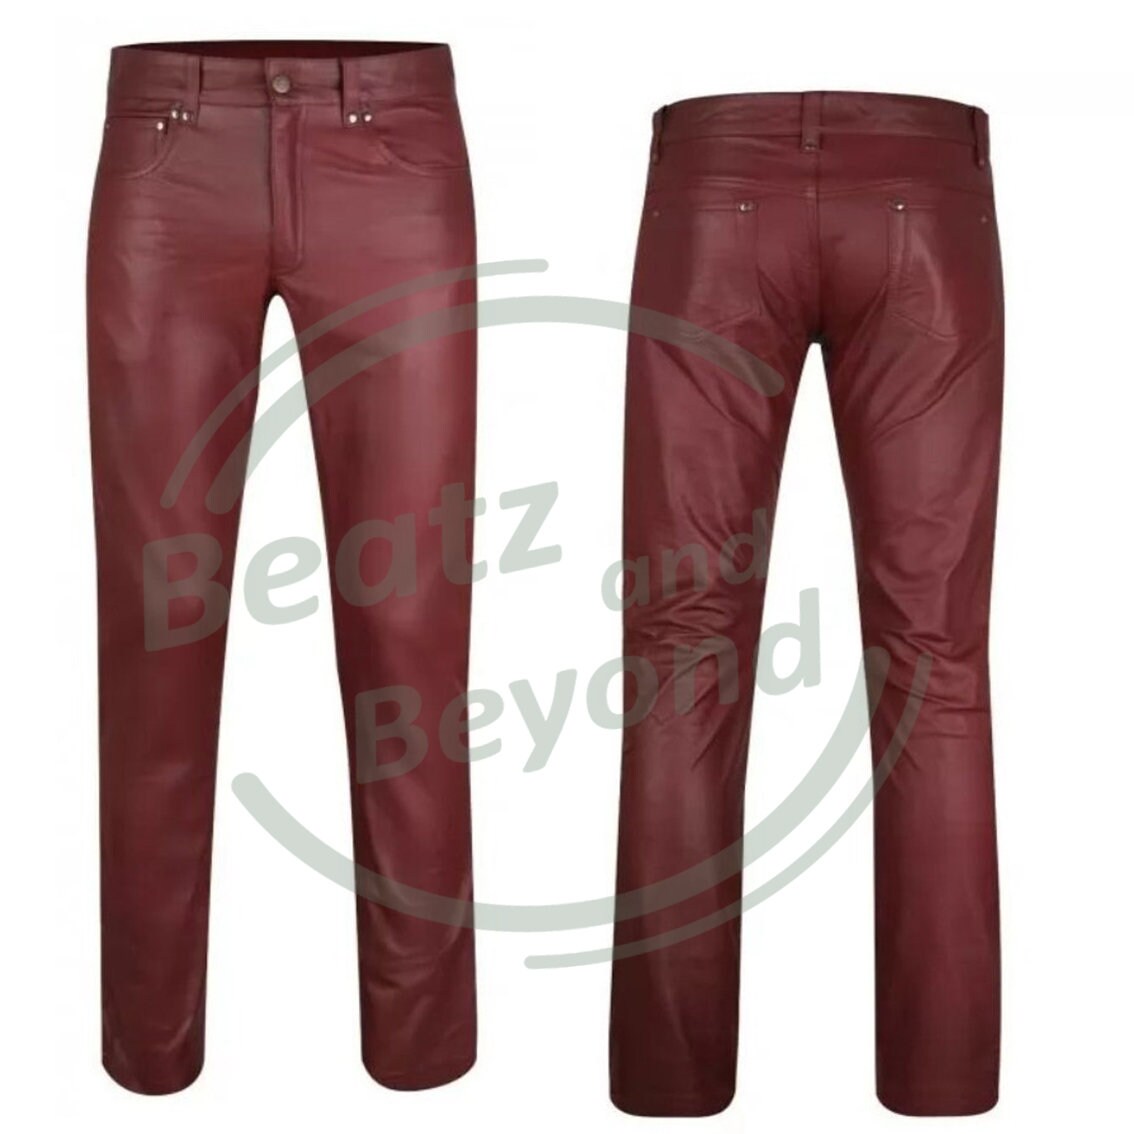 Woestijn bros Celsius New Men's Maroon Leather Pant 501 Jeans Rider Biker Men - Etsy